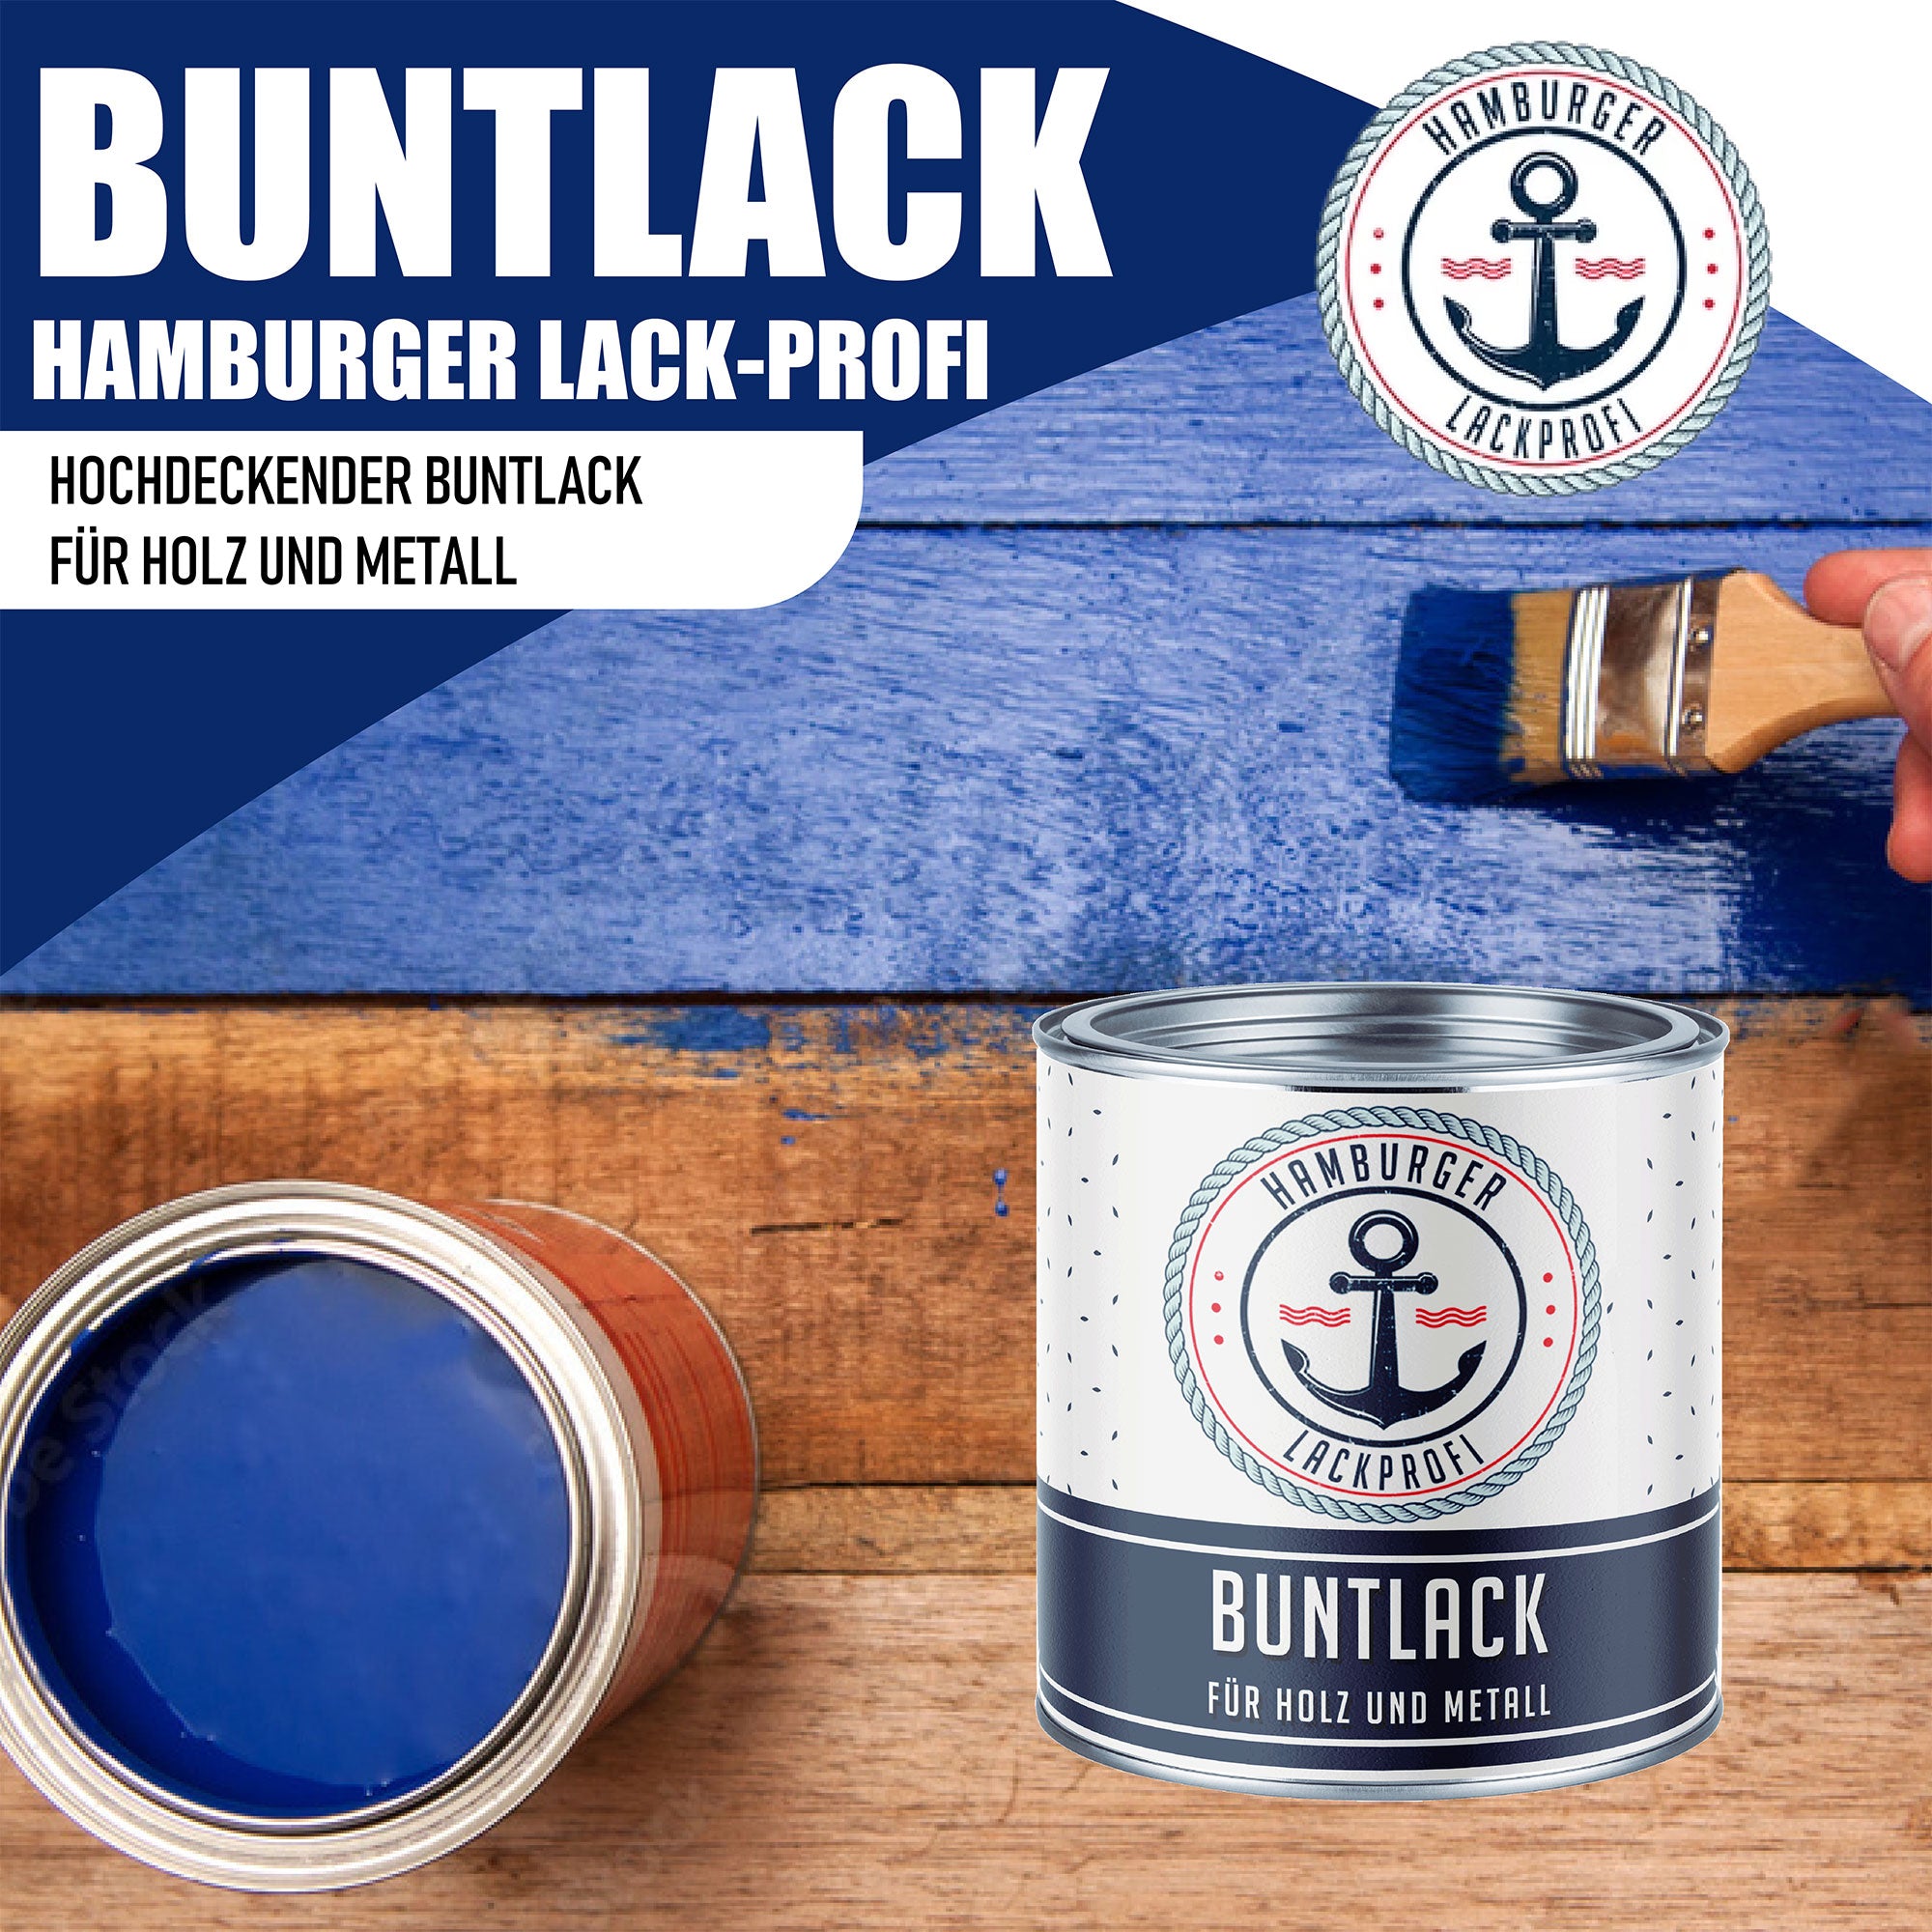 Hamburger Lack-Profi Buntlack in Graubeige RAL 1019 mit Lackierset (X300) & Verdünnung (1 L) - 30% Sparangebot